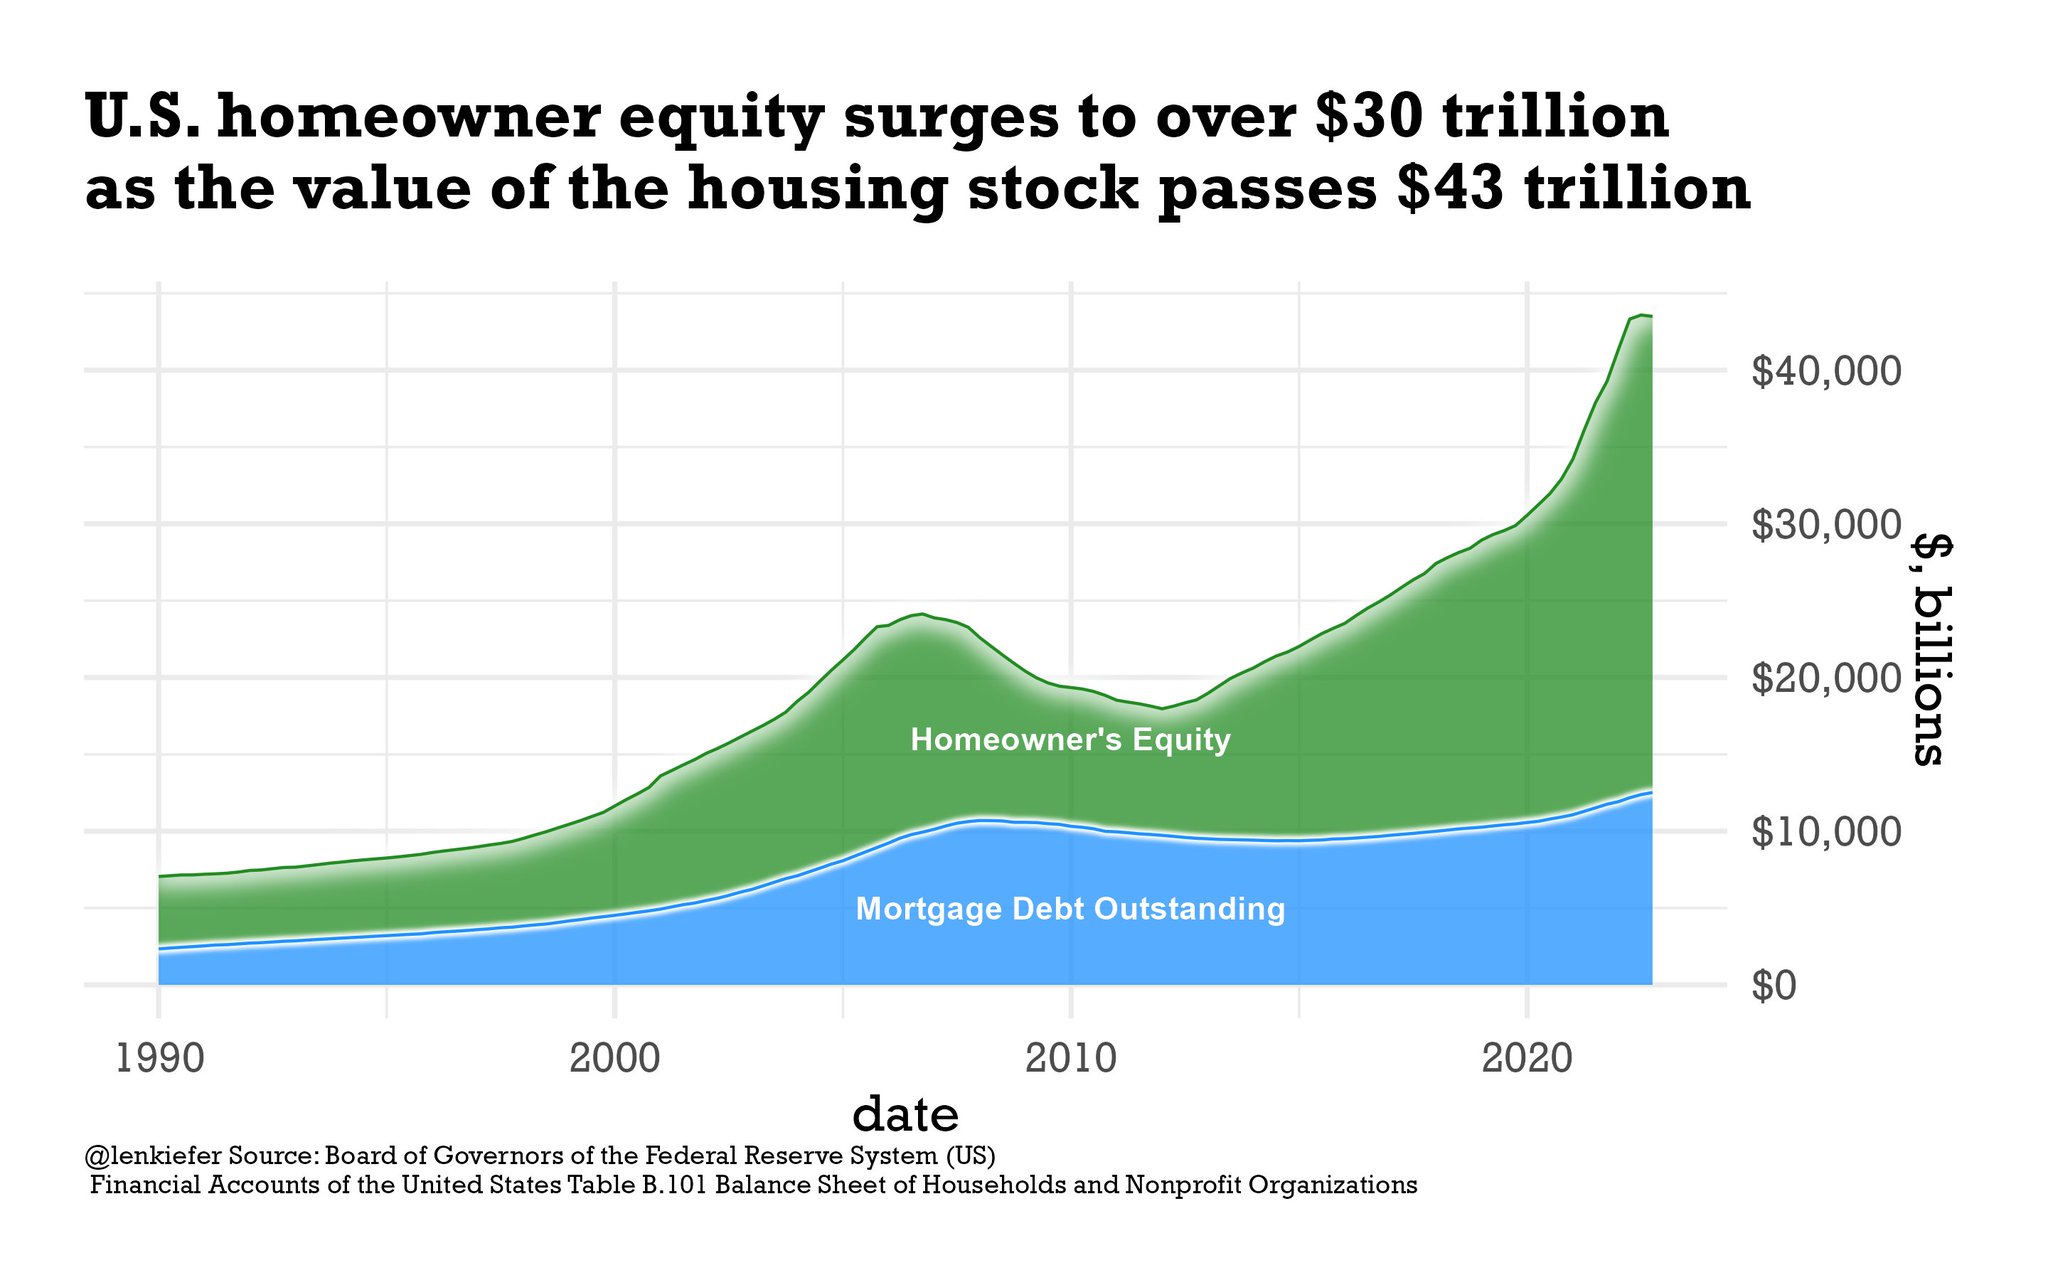 U.S. homeowner equity versa mortgage debt outstanding